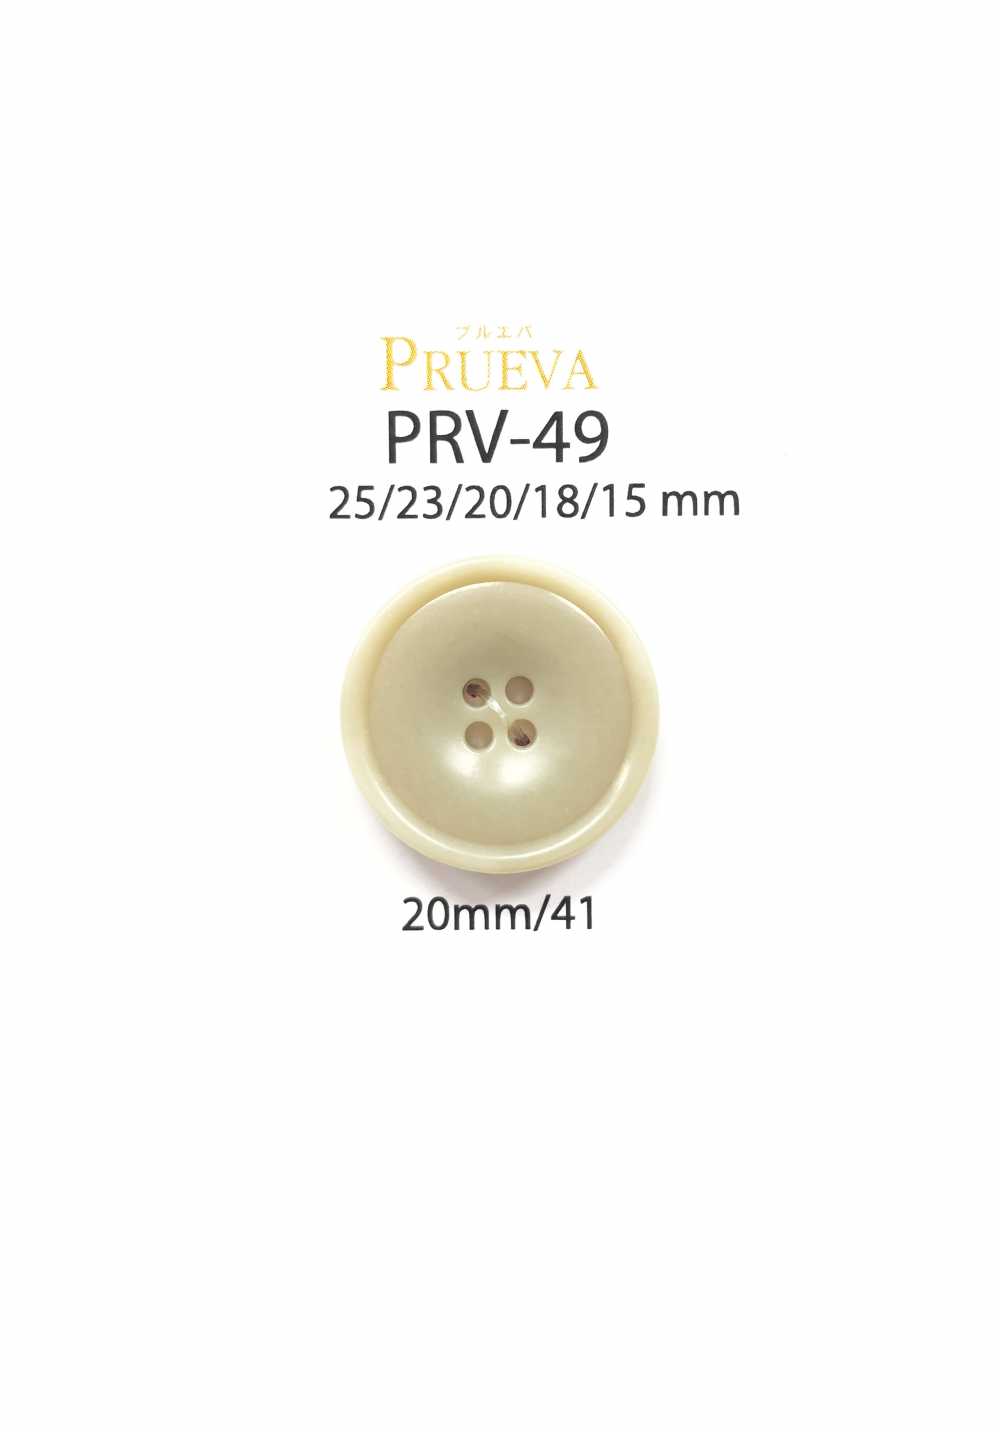 PRV-49 Bio-Uria 4-hole Button IRIS